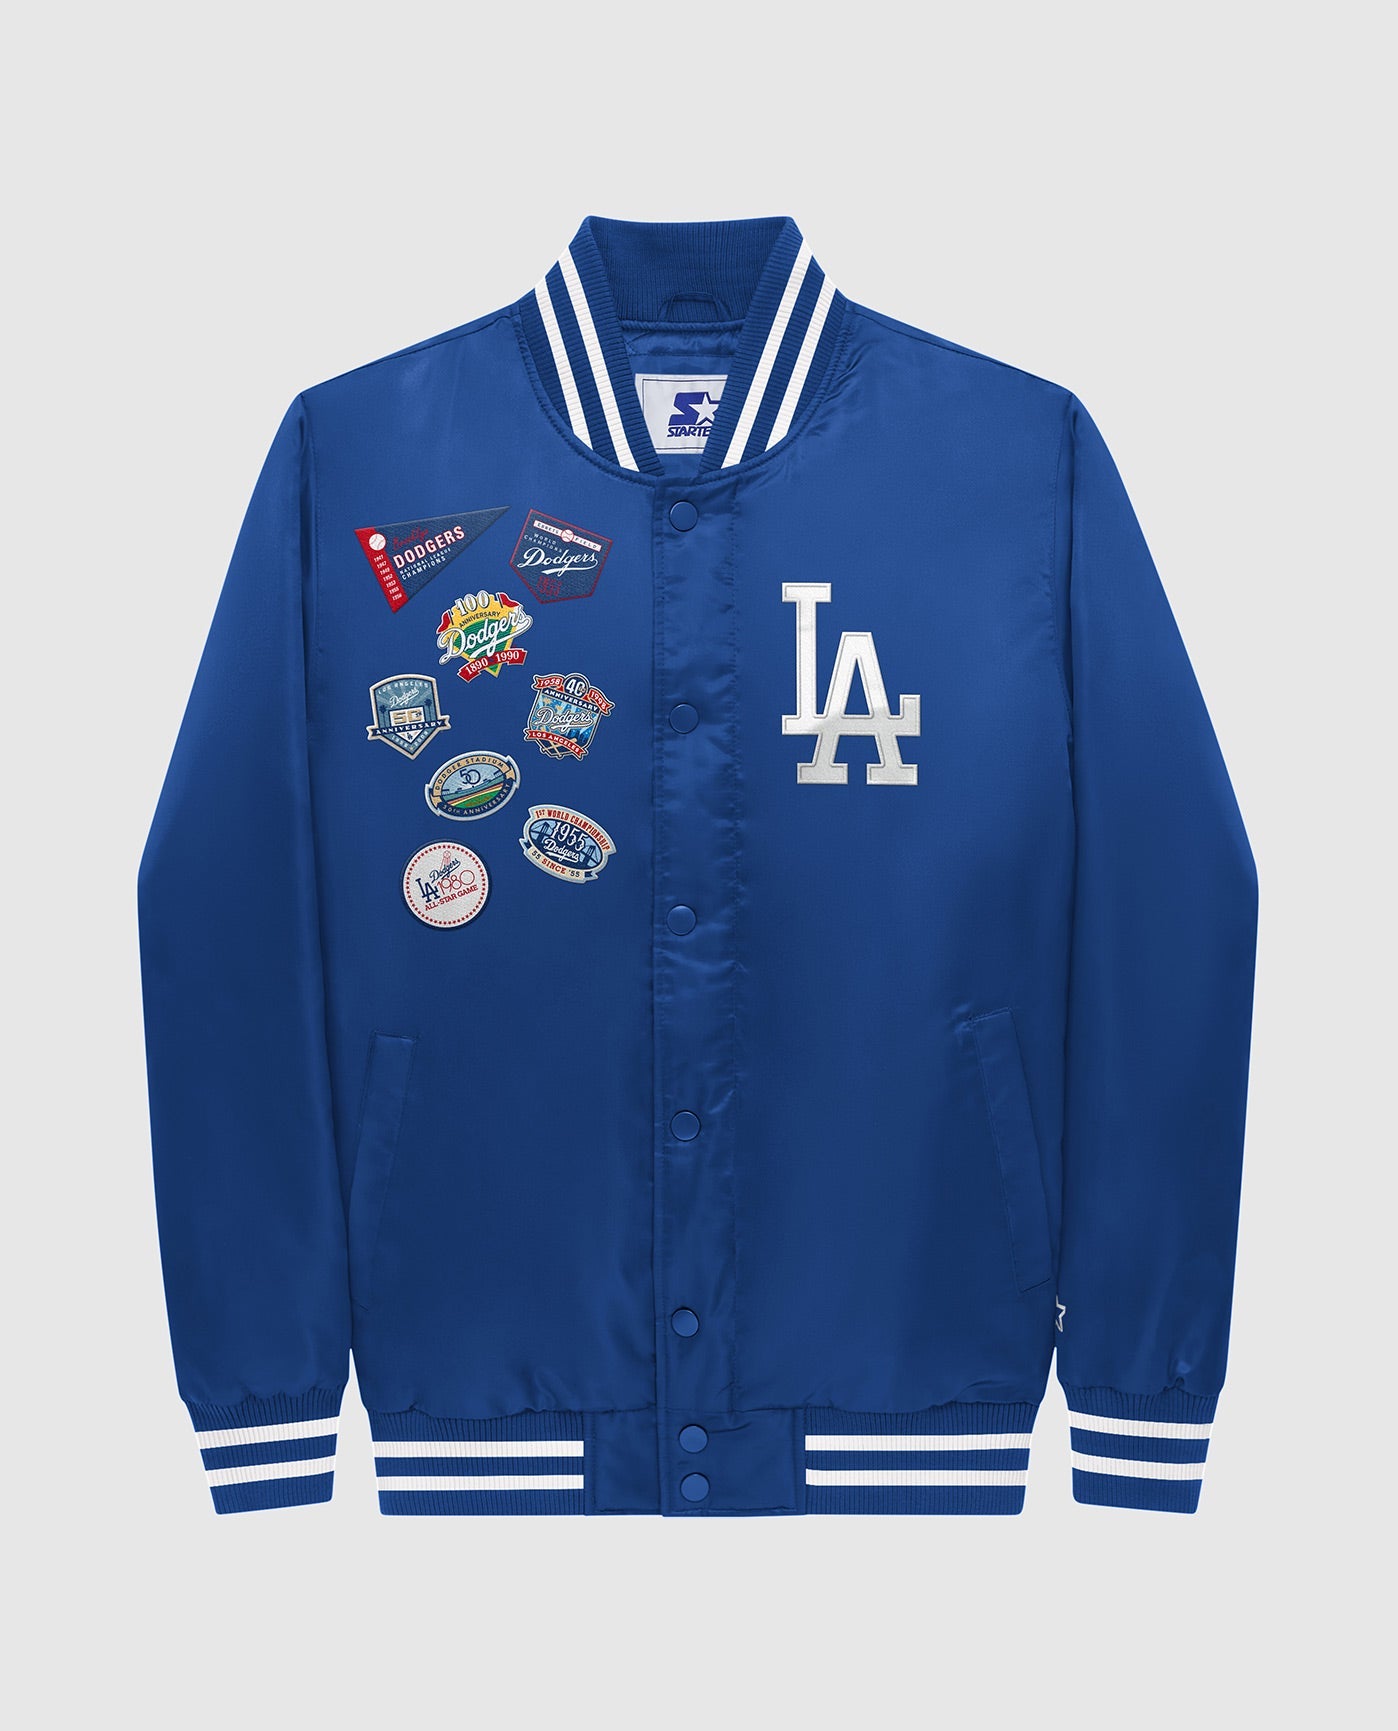 Dodgers Los Angeles LA Baseball Jacket